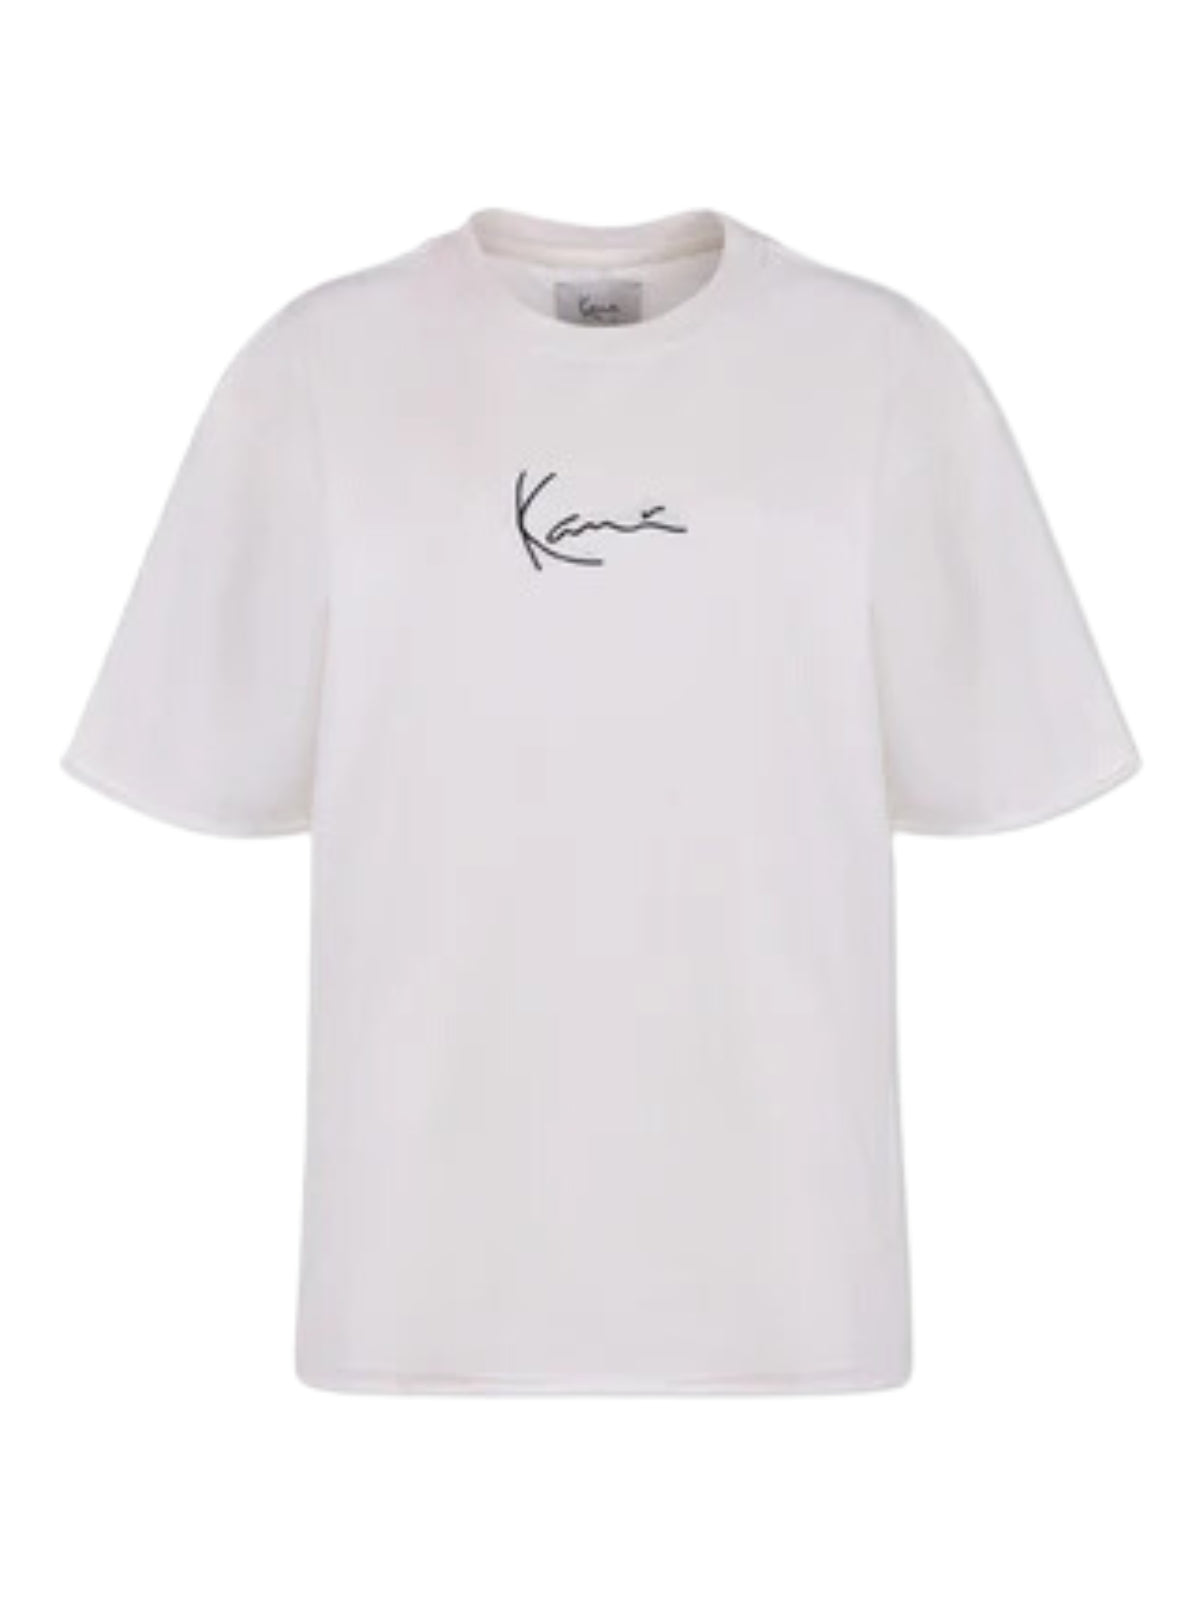 Karl Kani T-Shirt Small Sign White